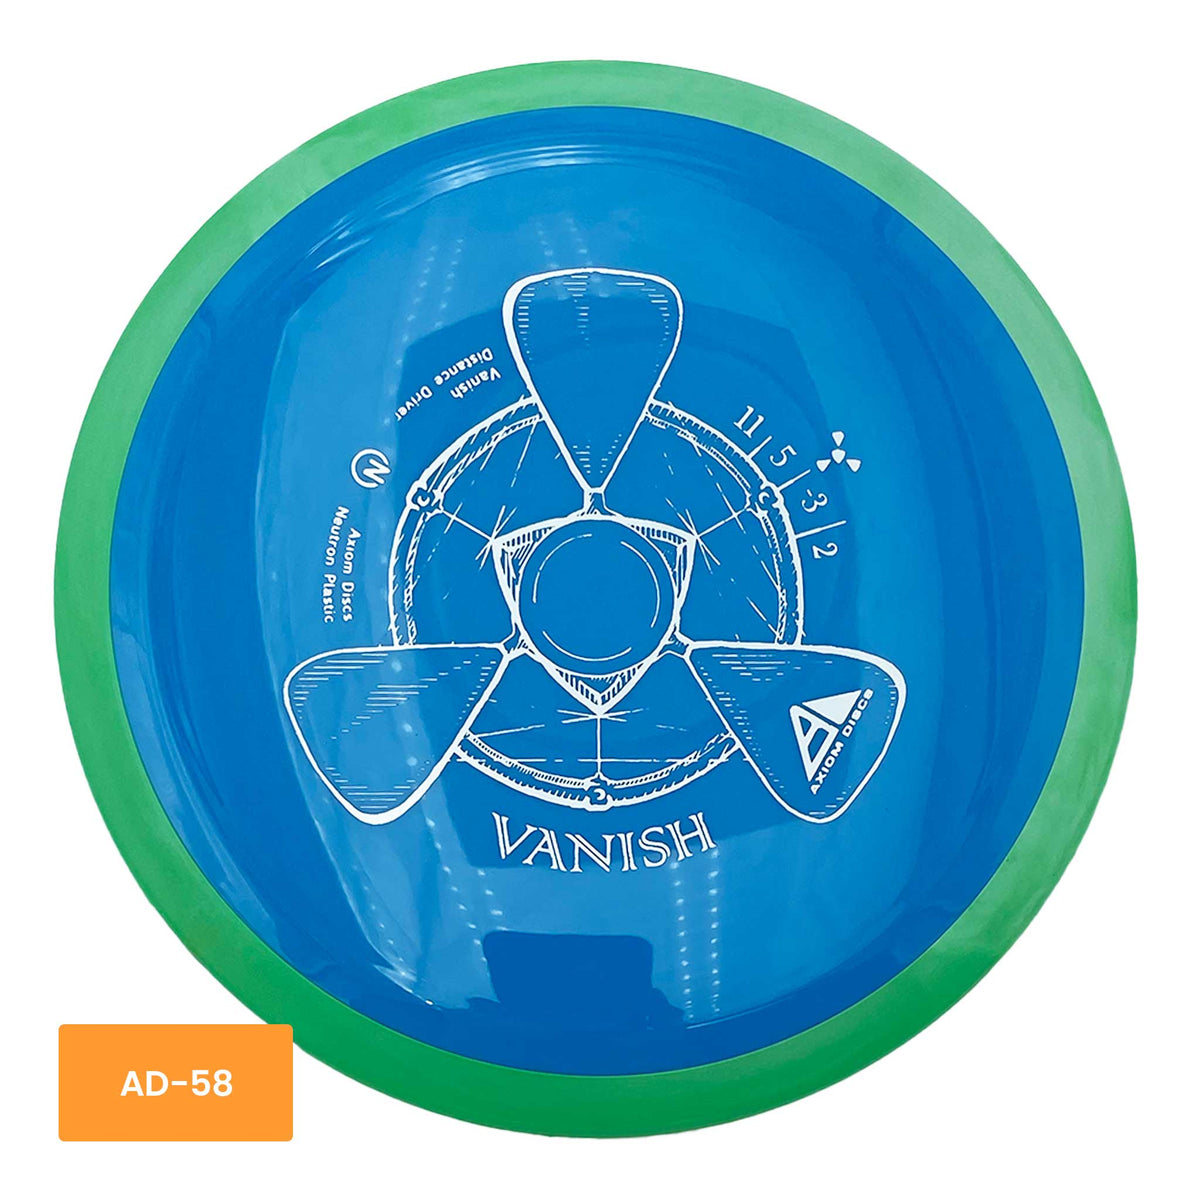 Axiom Discs Neutron Vanish distance driver - Blue / Green